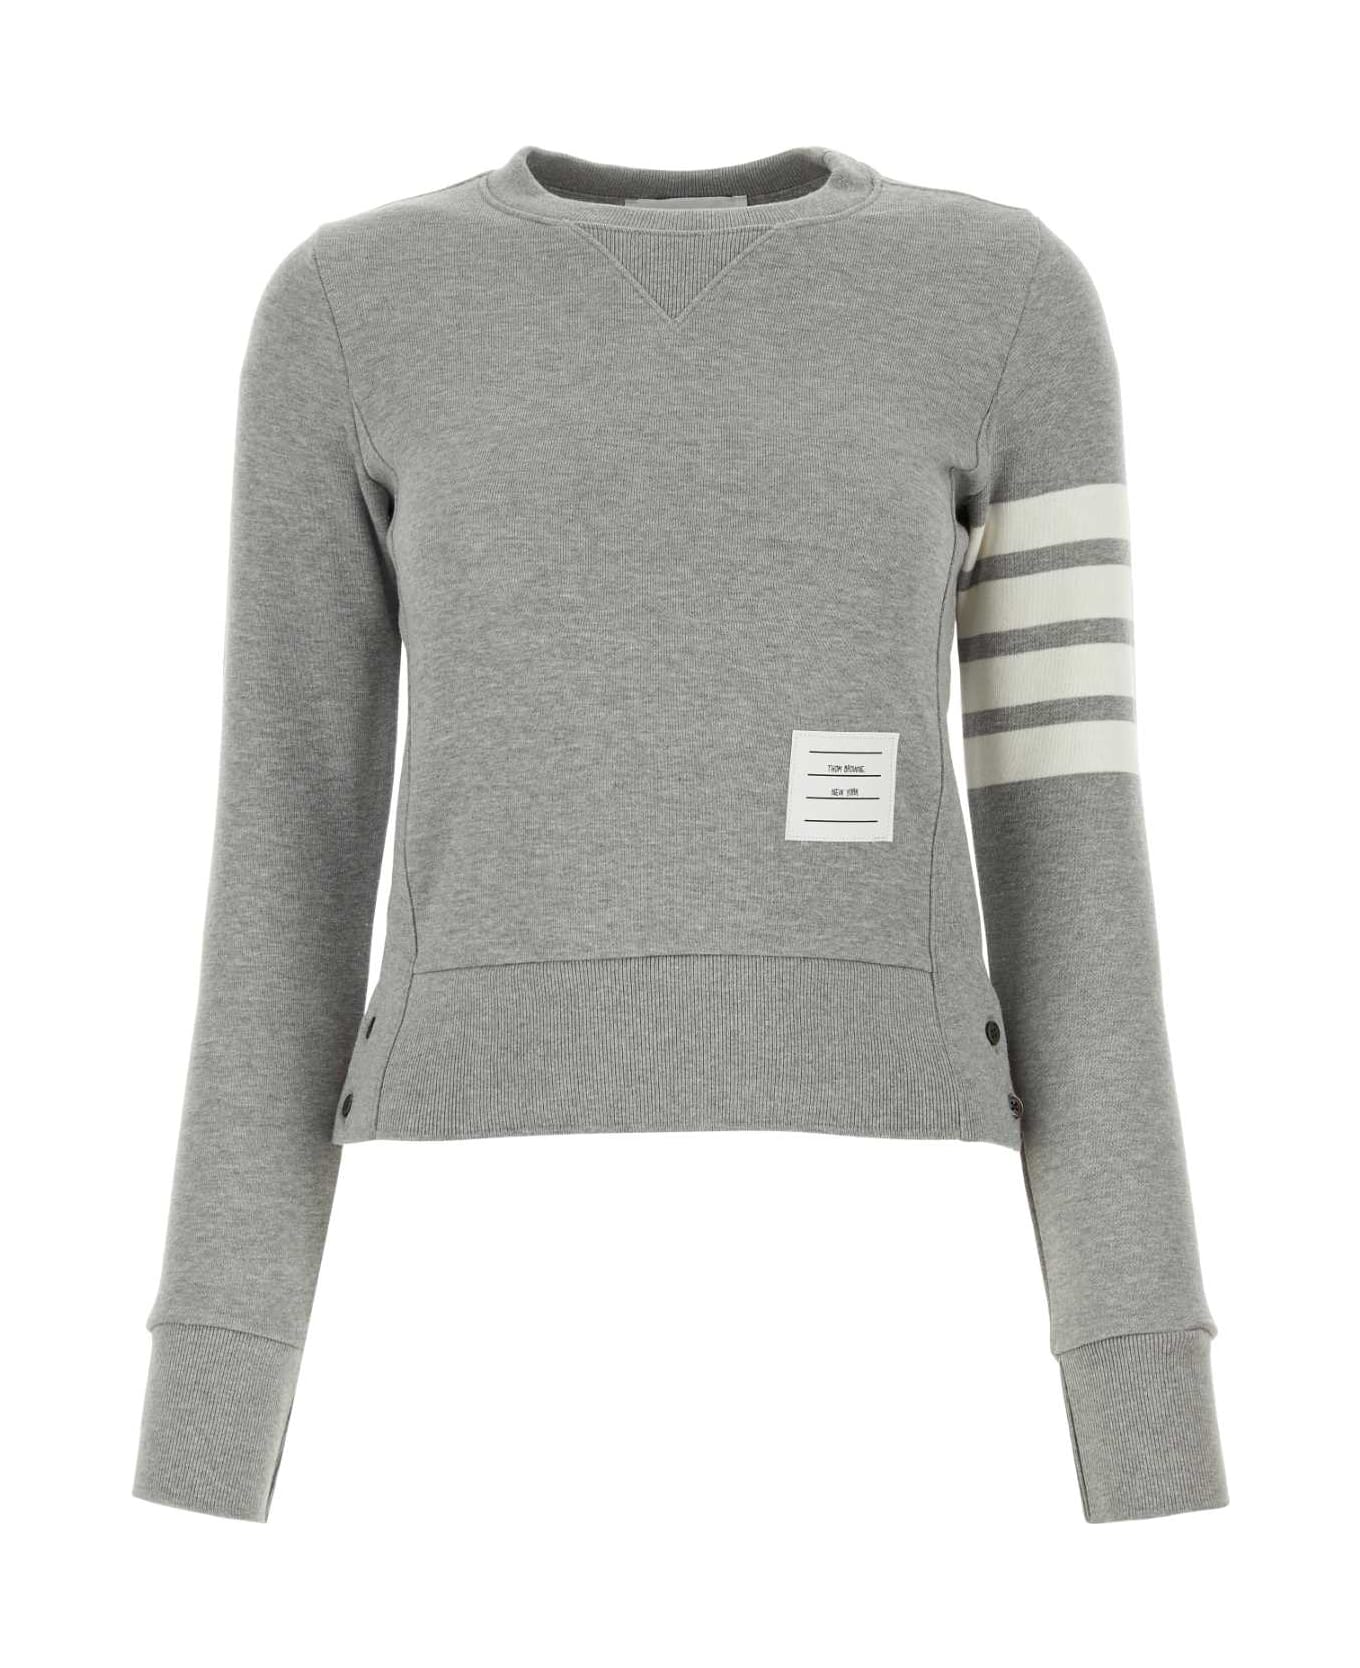 Thom Browne Grey Cotton Sweatshirt - 055